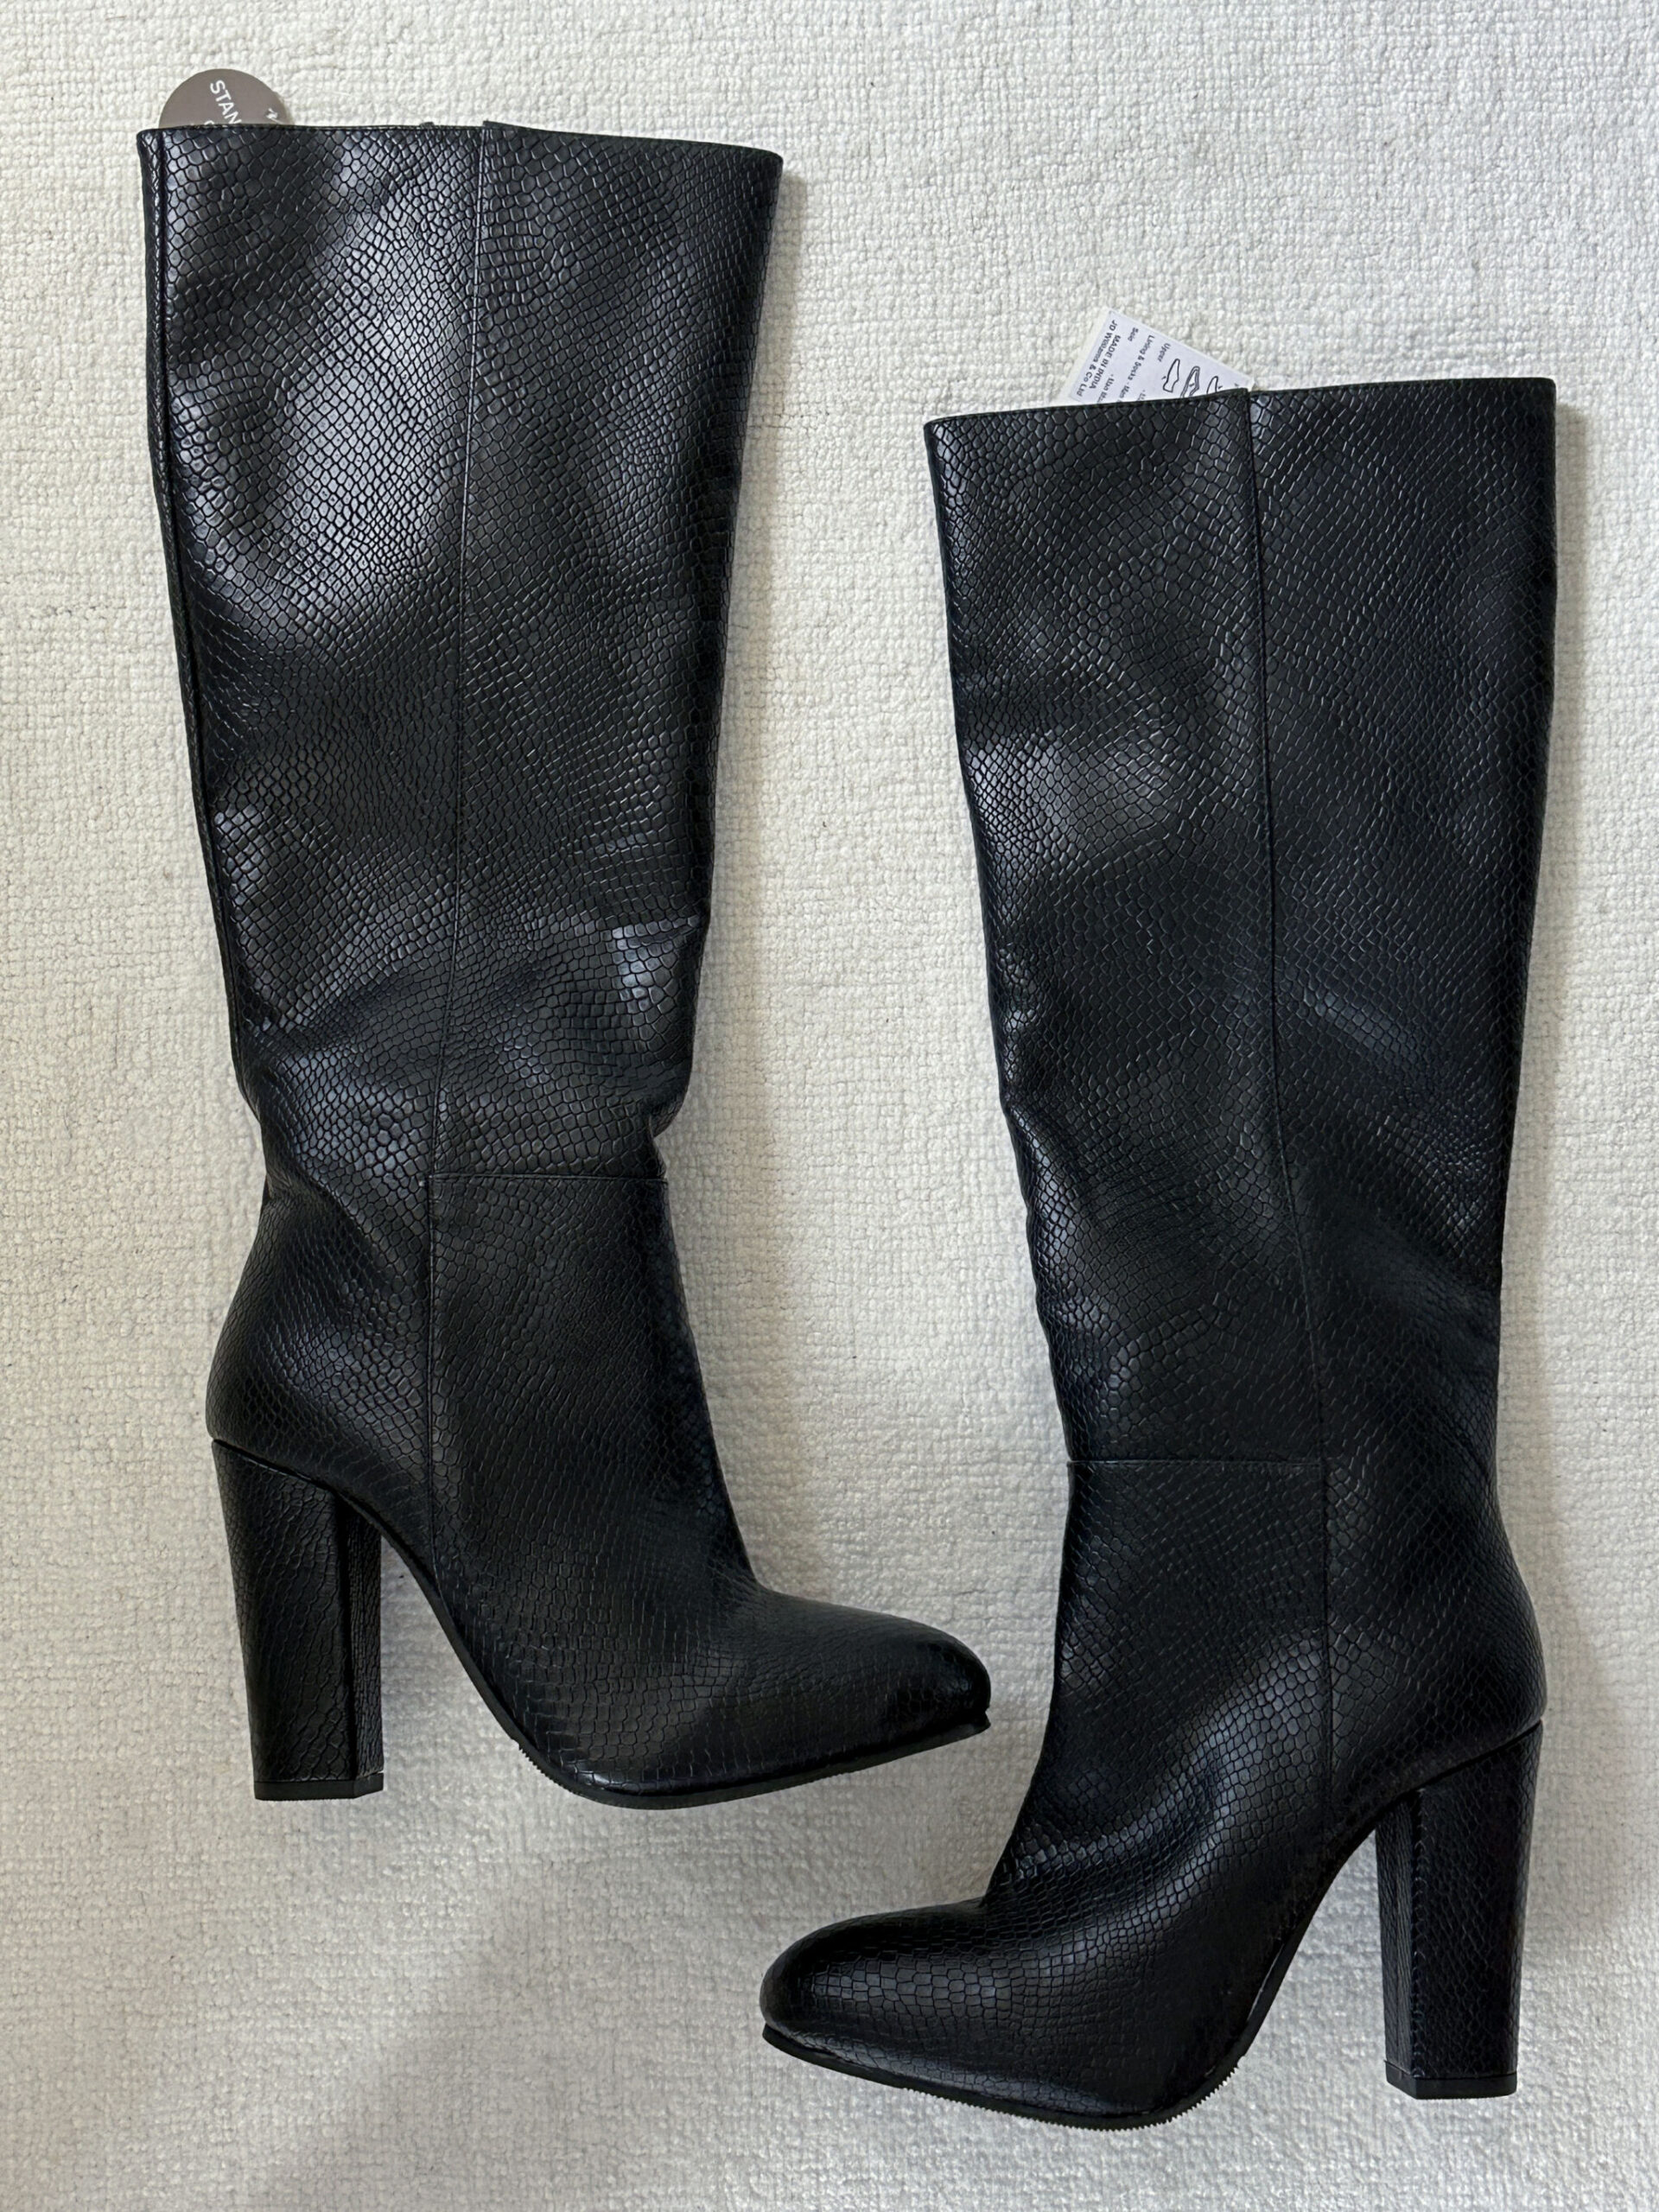 Black Knee High Boots Size 8 [Brand New w/ Tags] - Merideth Morgan